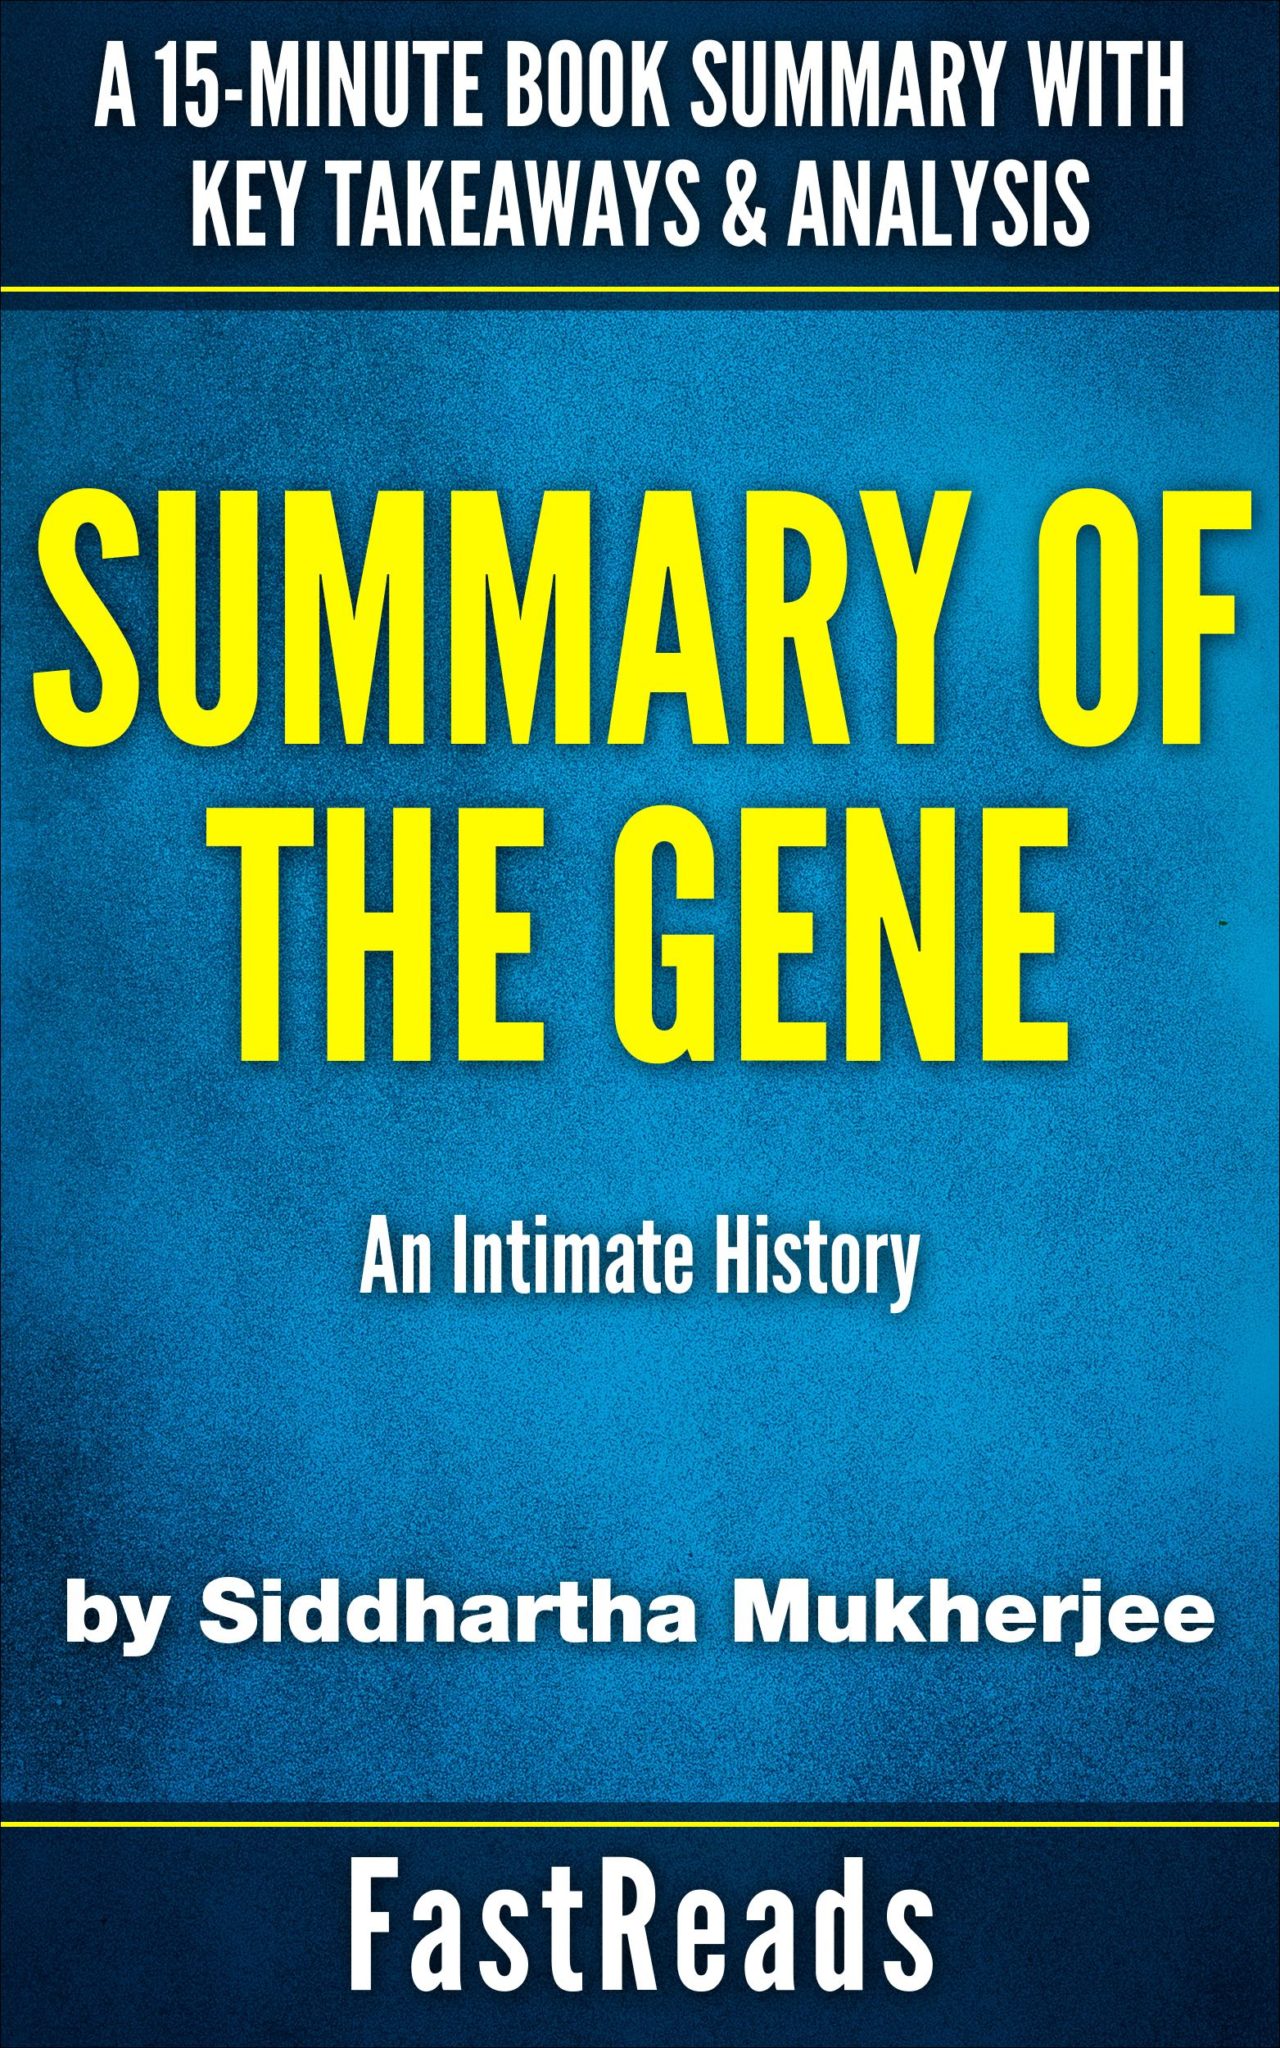 FREE: Summary of The Gene by Siddhartha Mukherjee by Mohammad Saymon